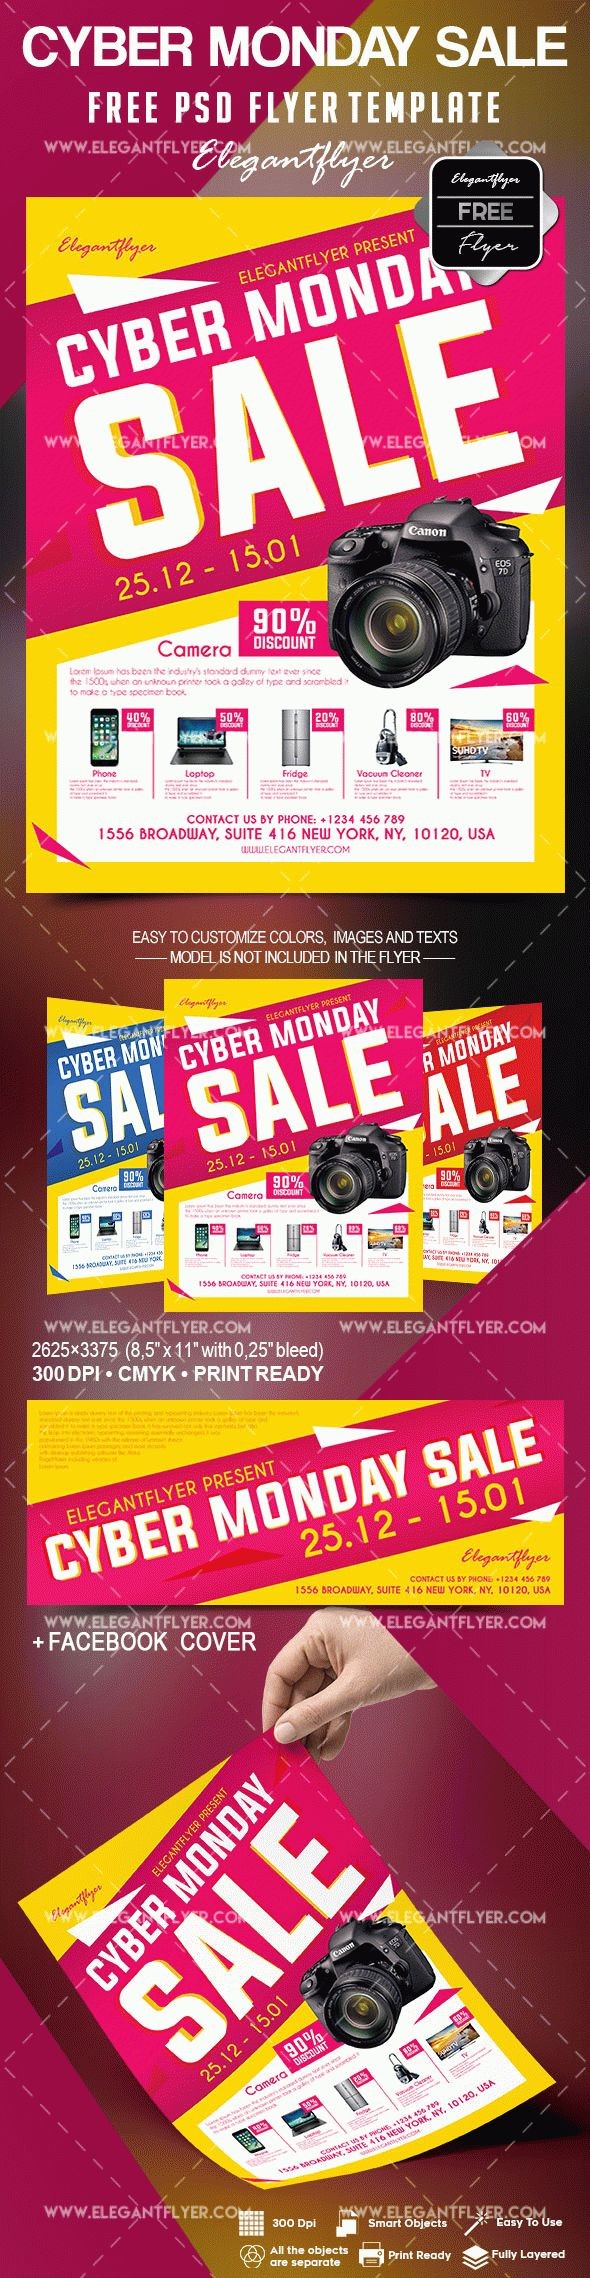 Cyber Monday Sale by ElegantFlyer